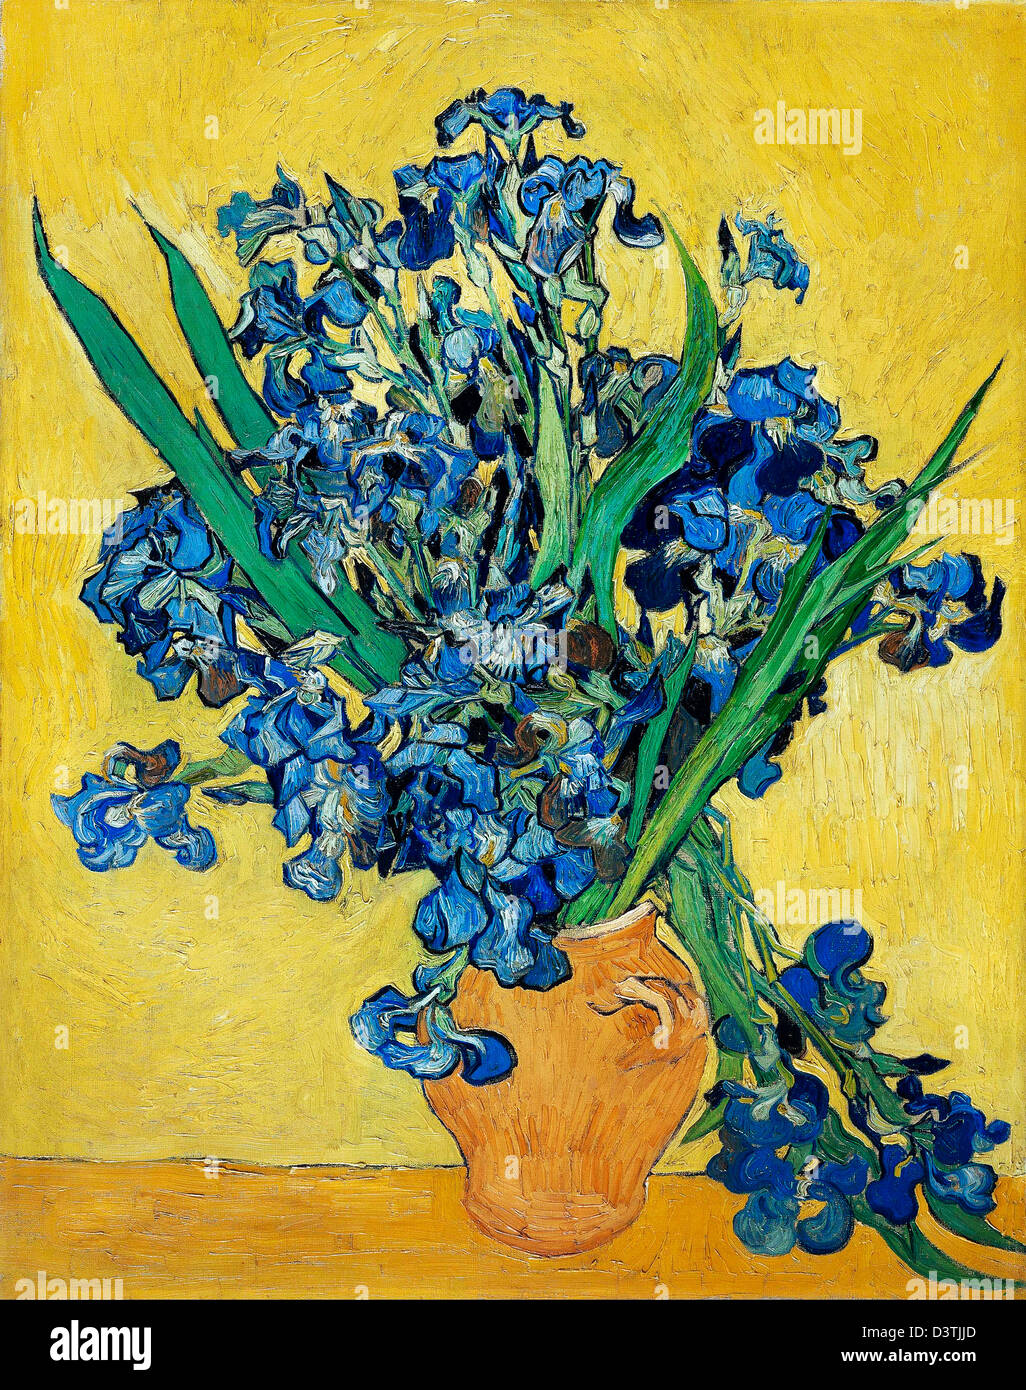 Vincent van Gogh, Irises 1890 Oil on canvas. Van Gogh Museum, Amsterdam, Netherlands. Stock Photo